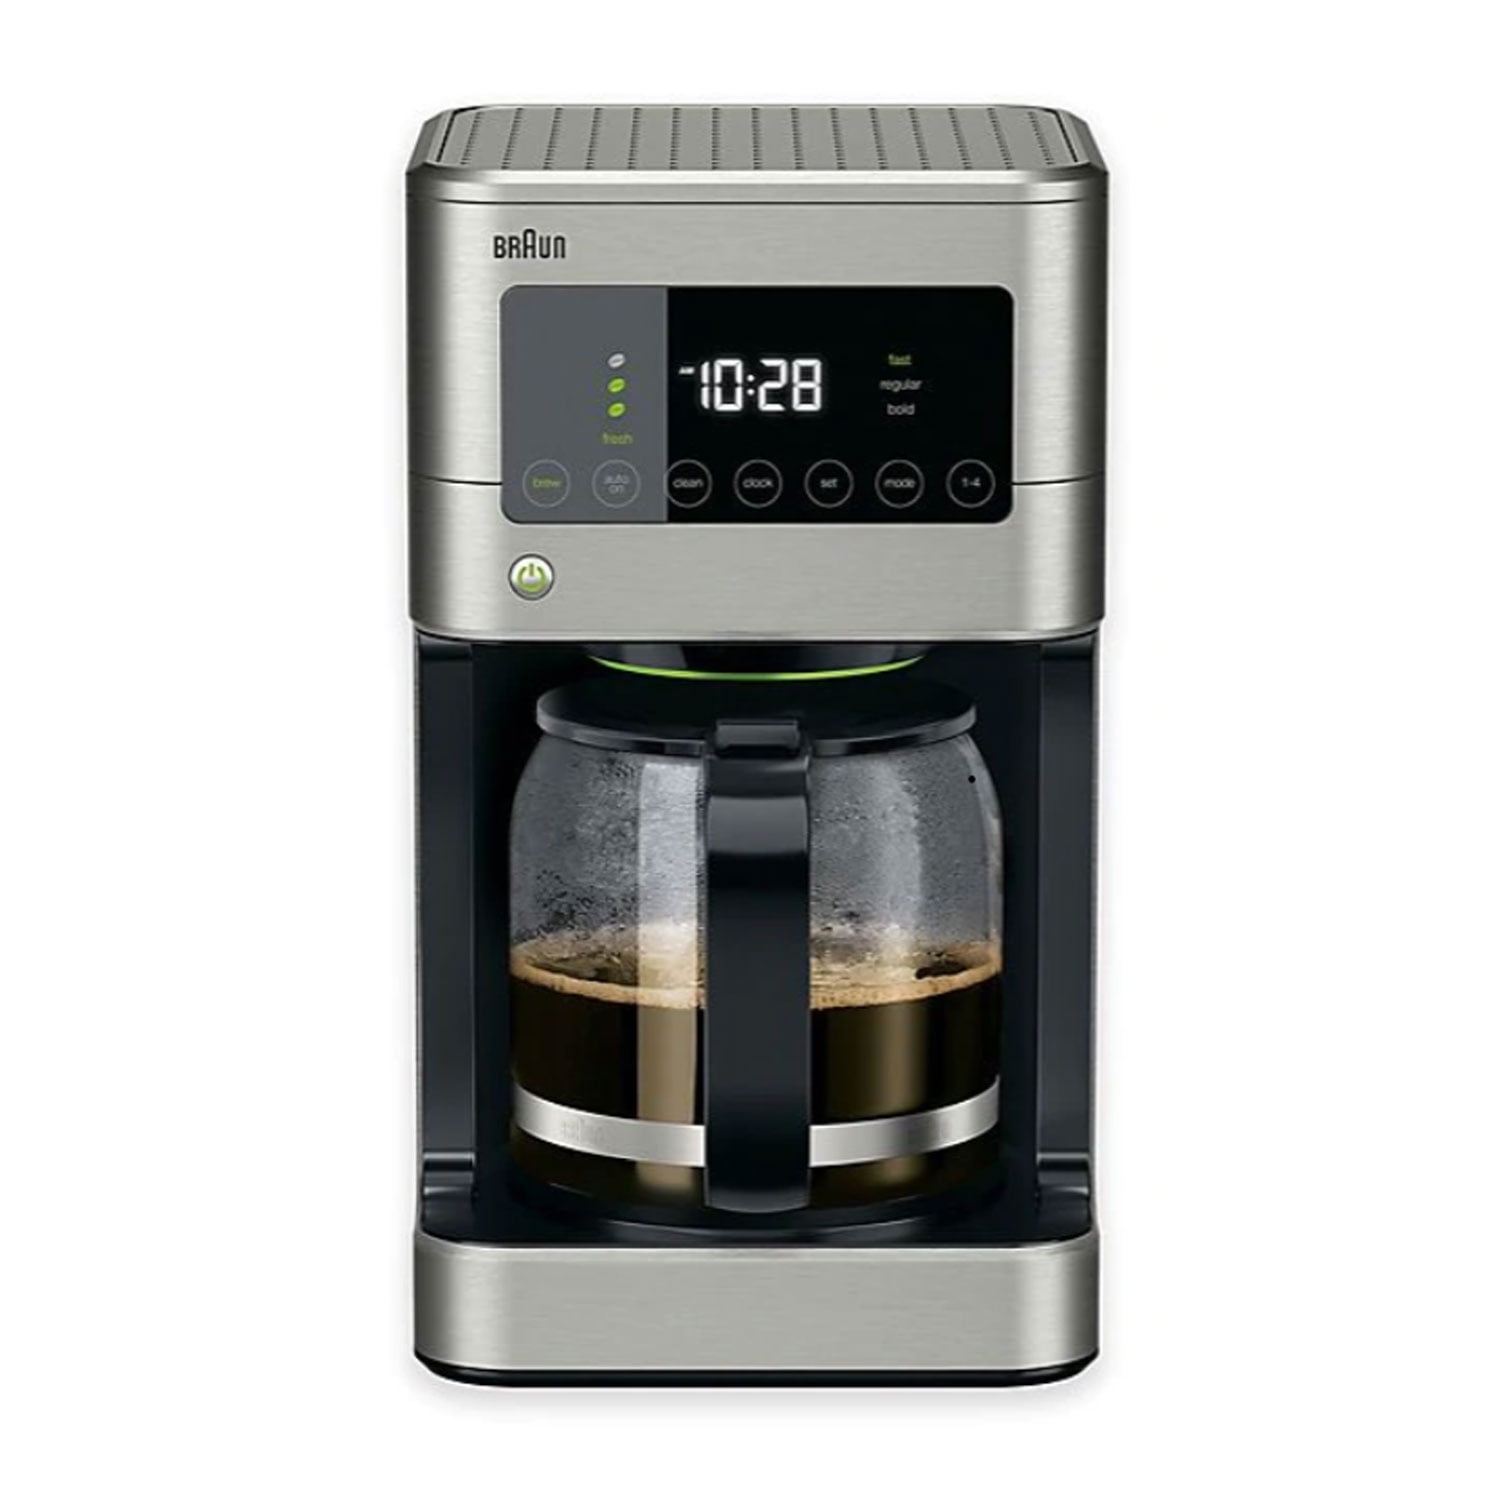 Braun KF7070 BrewSense Drip Glass Coffeemaker, 12 Cup, Stainless Steel